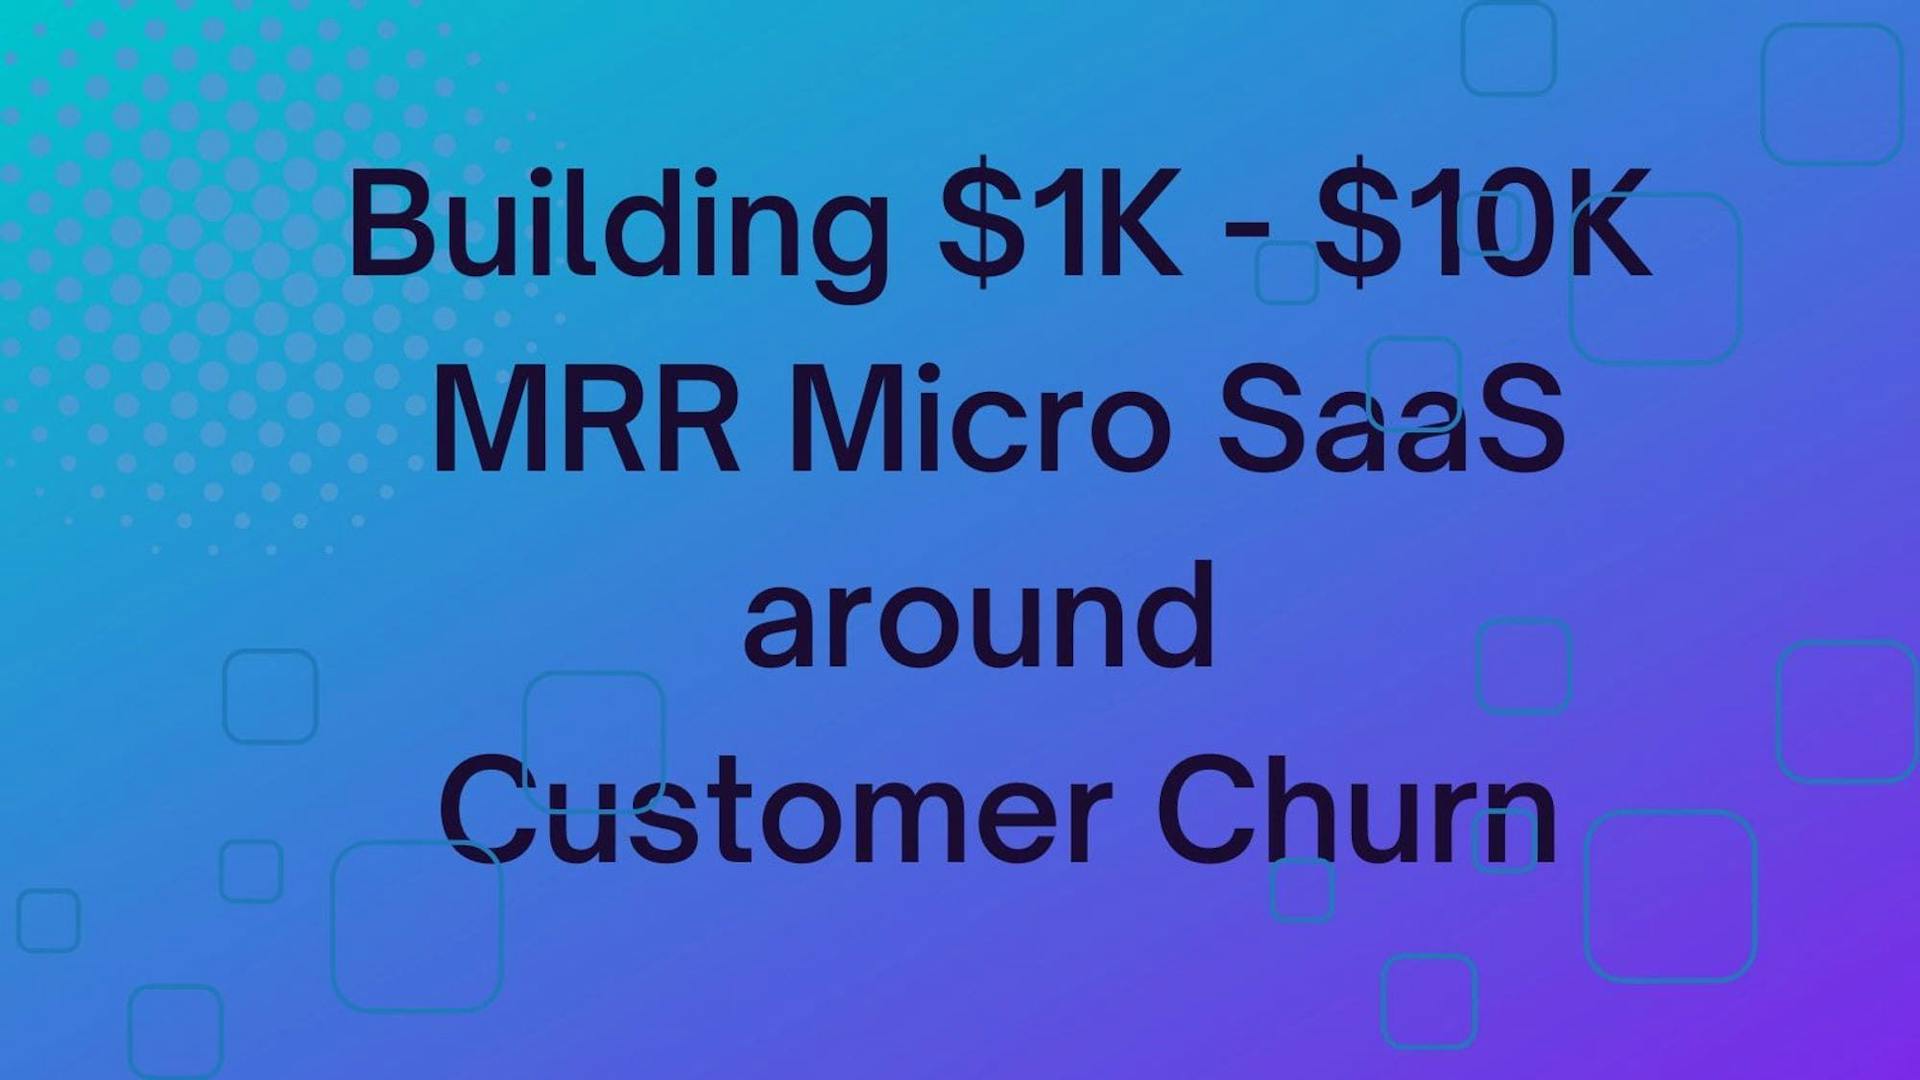 Cover Image for 3 Micro-SaaS Ideas around Customer Churn